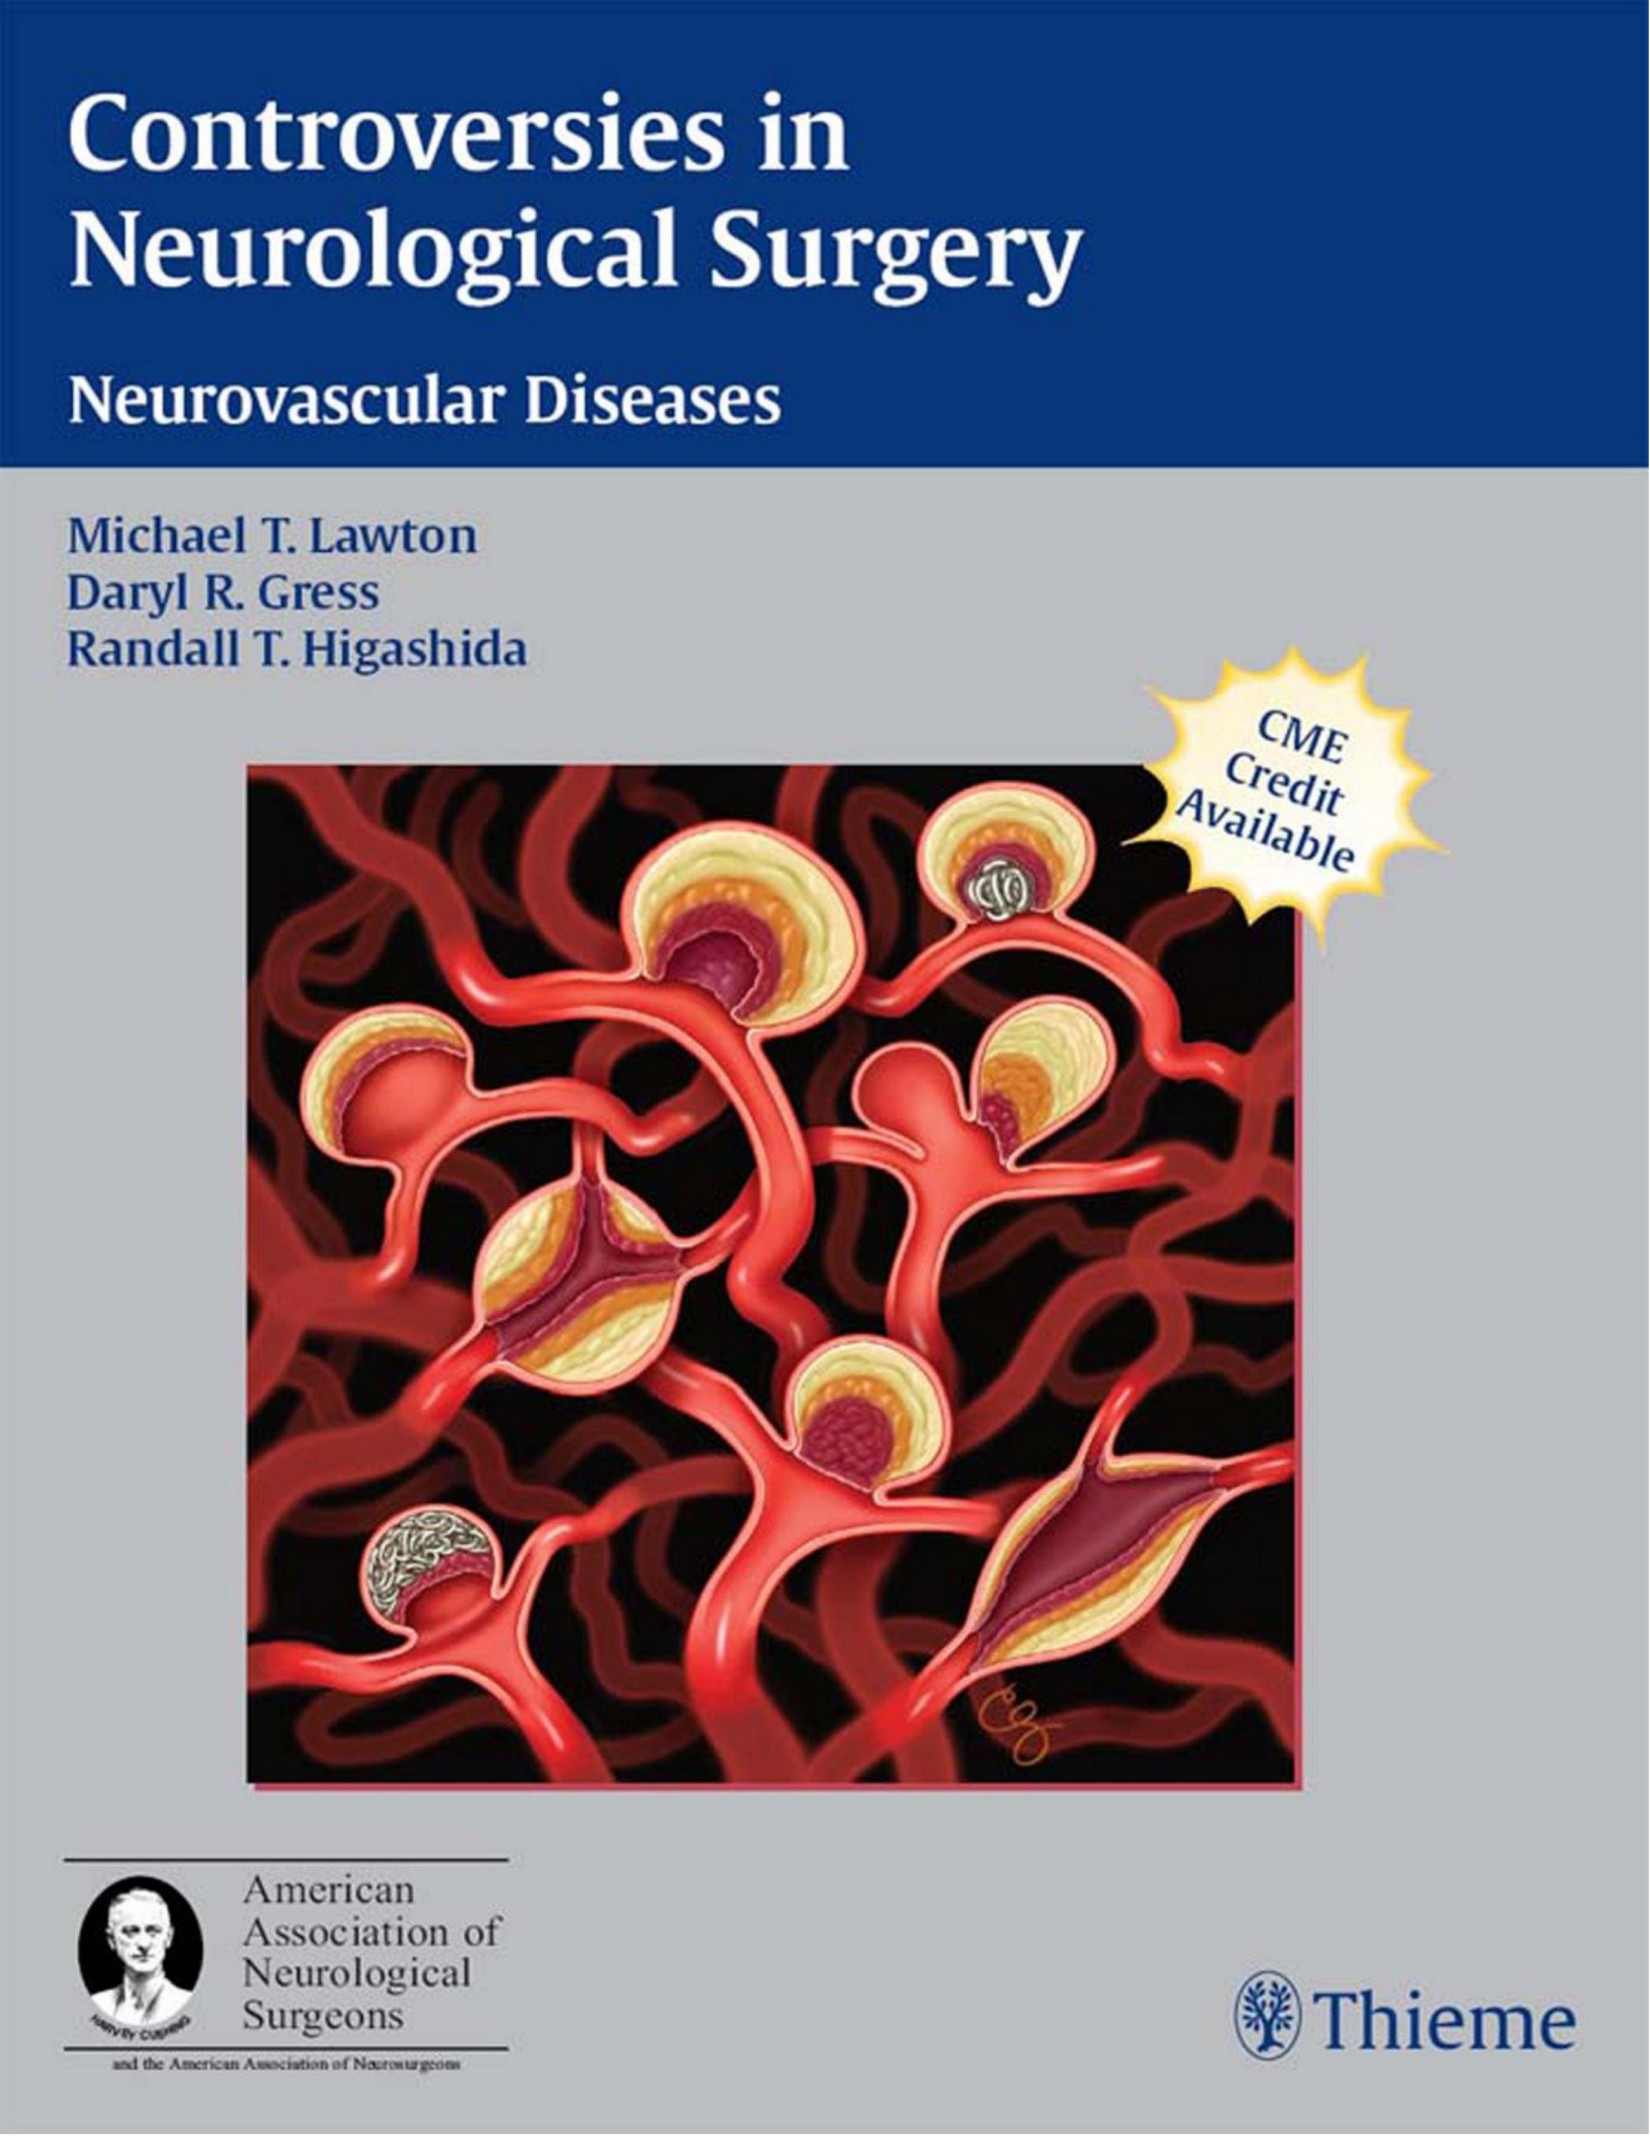 Controversies in Neurological Surgery-Neurovascular Diseases.jpg